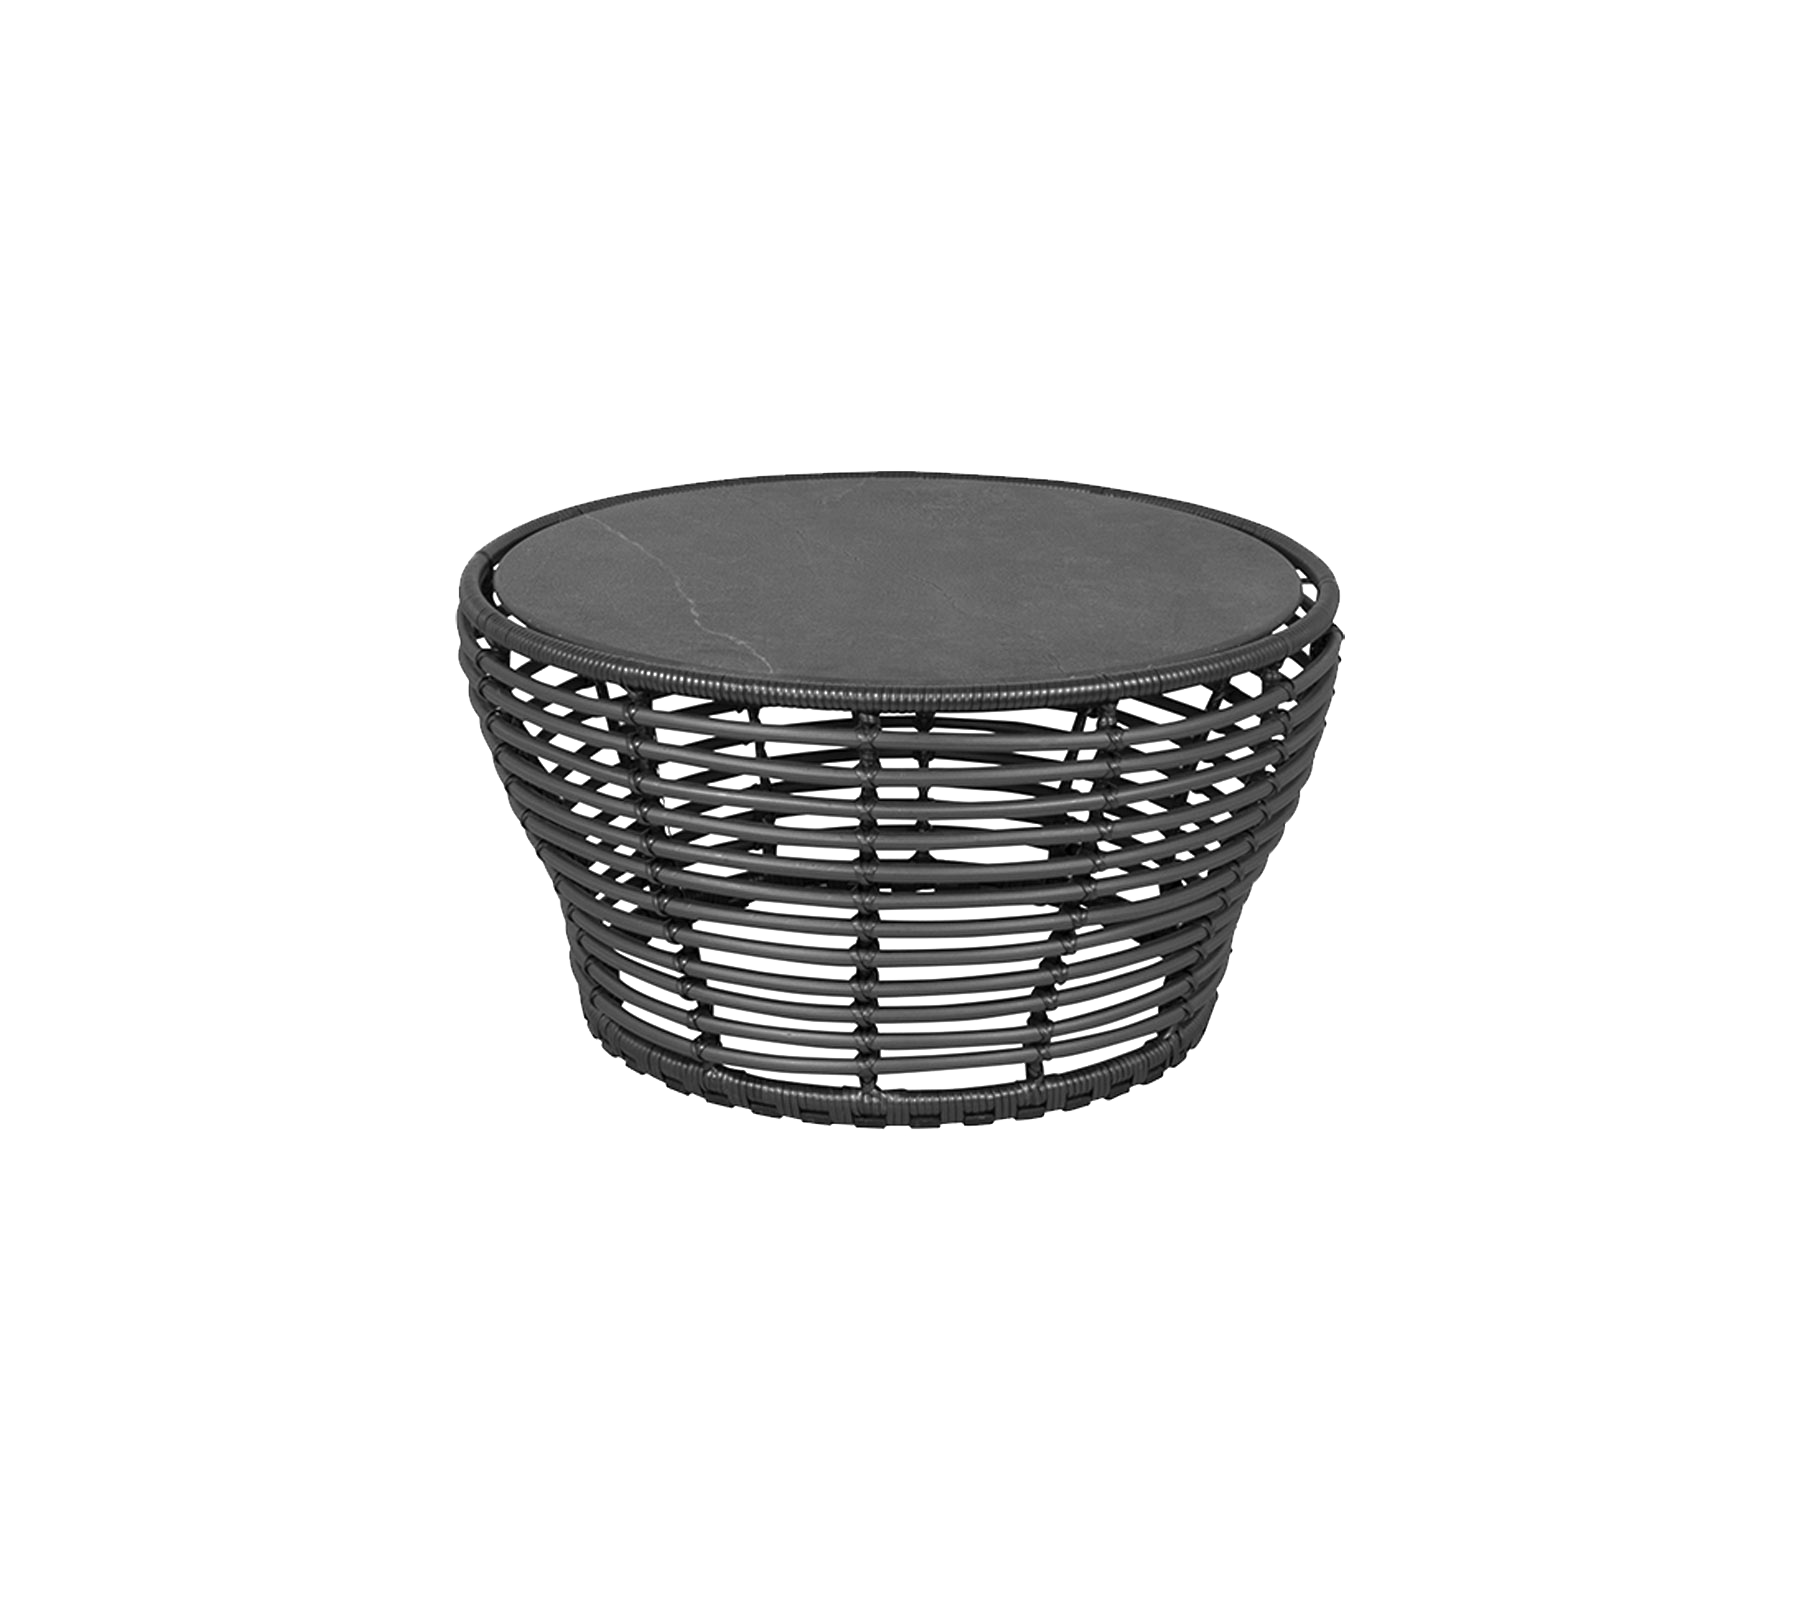 Cane-Line - Basket coffee table, medium